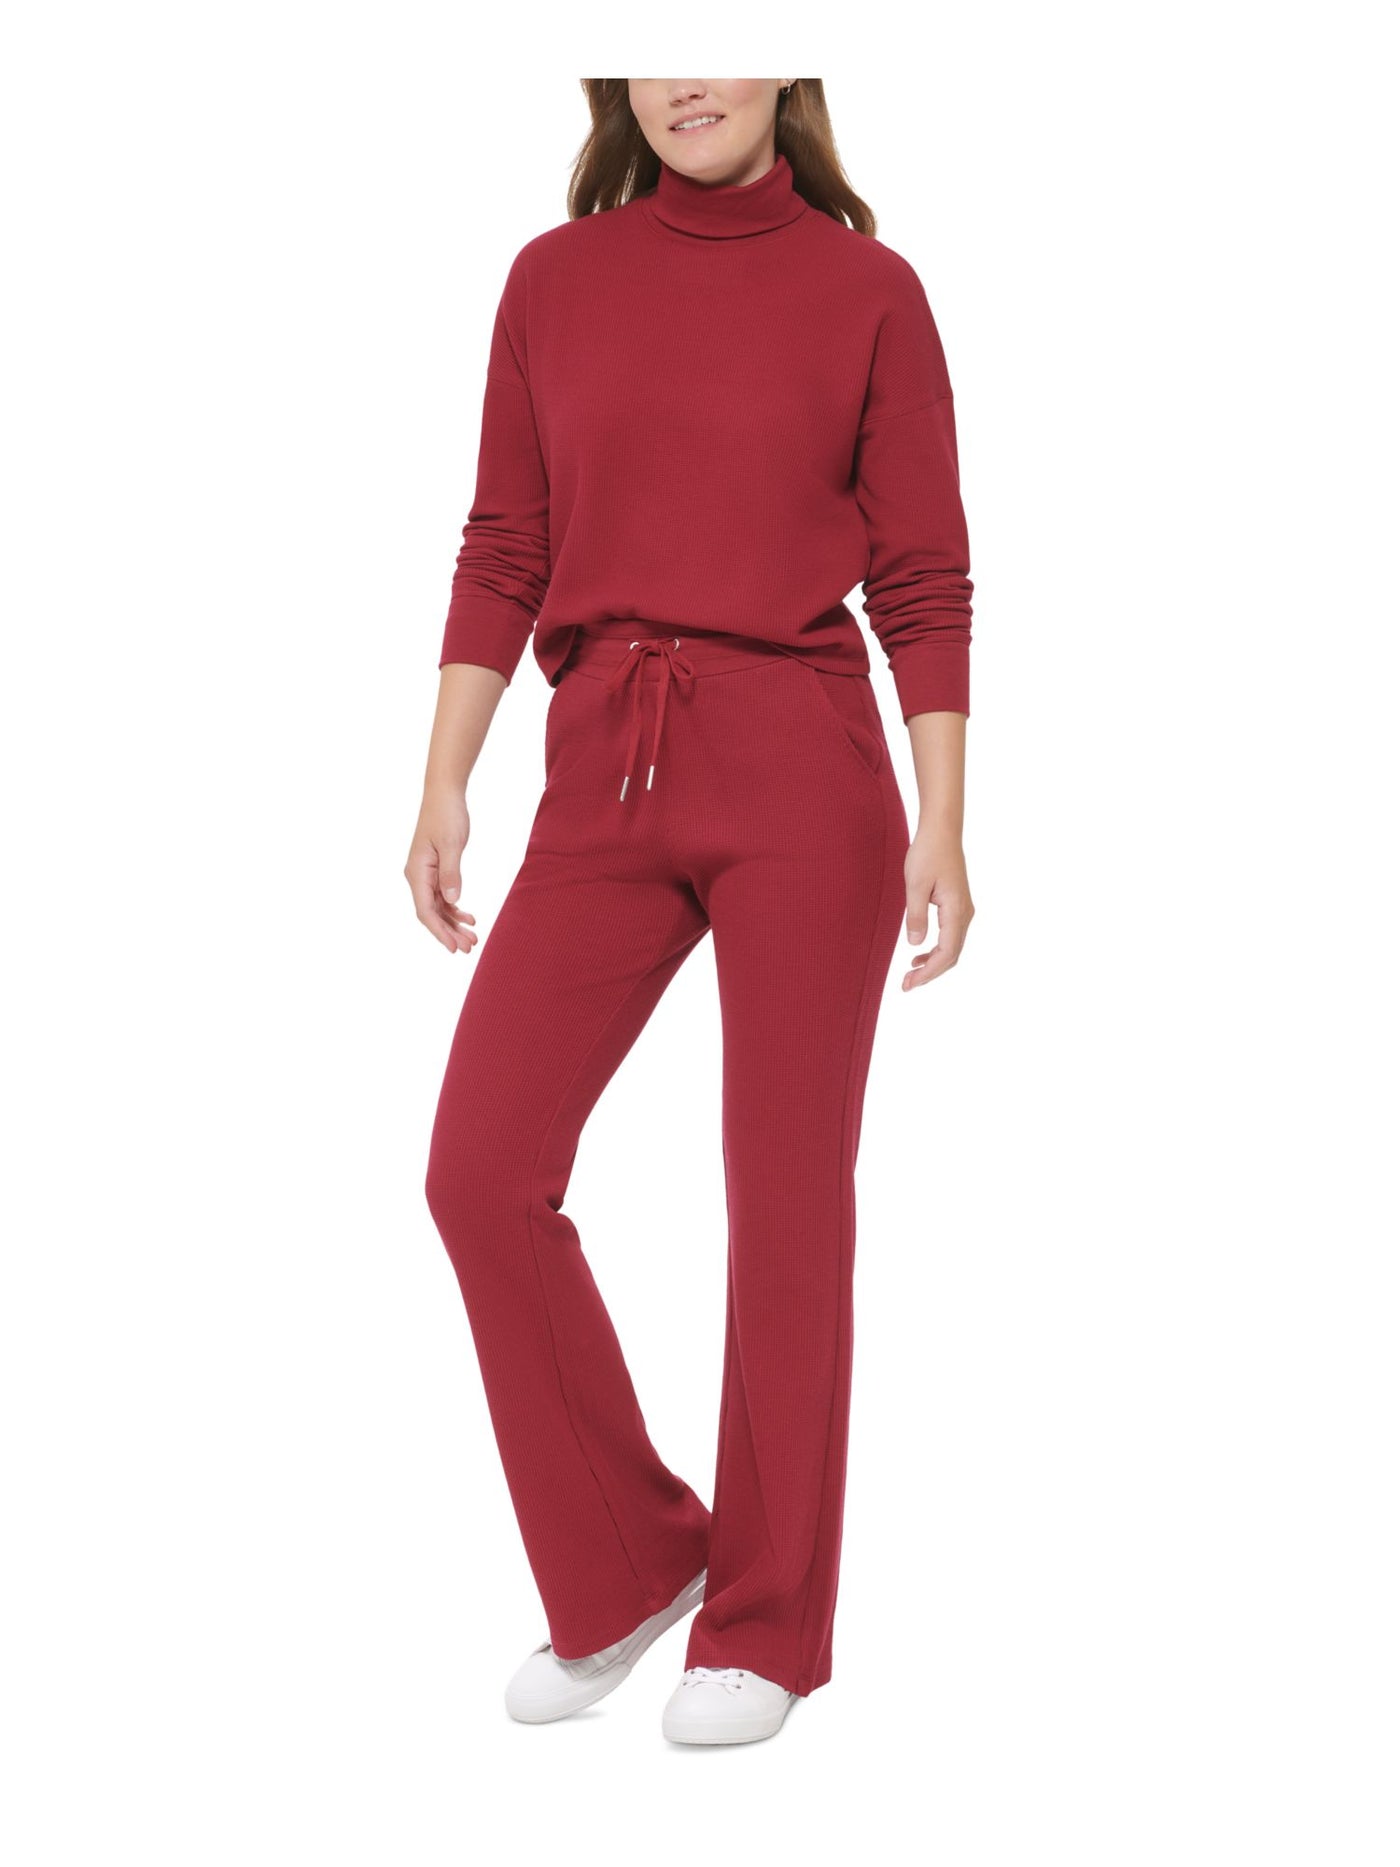 CALVIN KLEIN PERFORMANCE Womens Red Cotton Blend Textured Short Length Long Sleeve Turtle Neck Top M